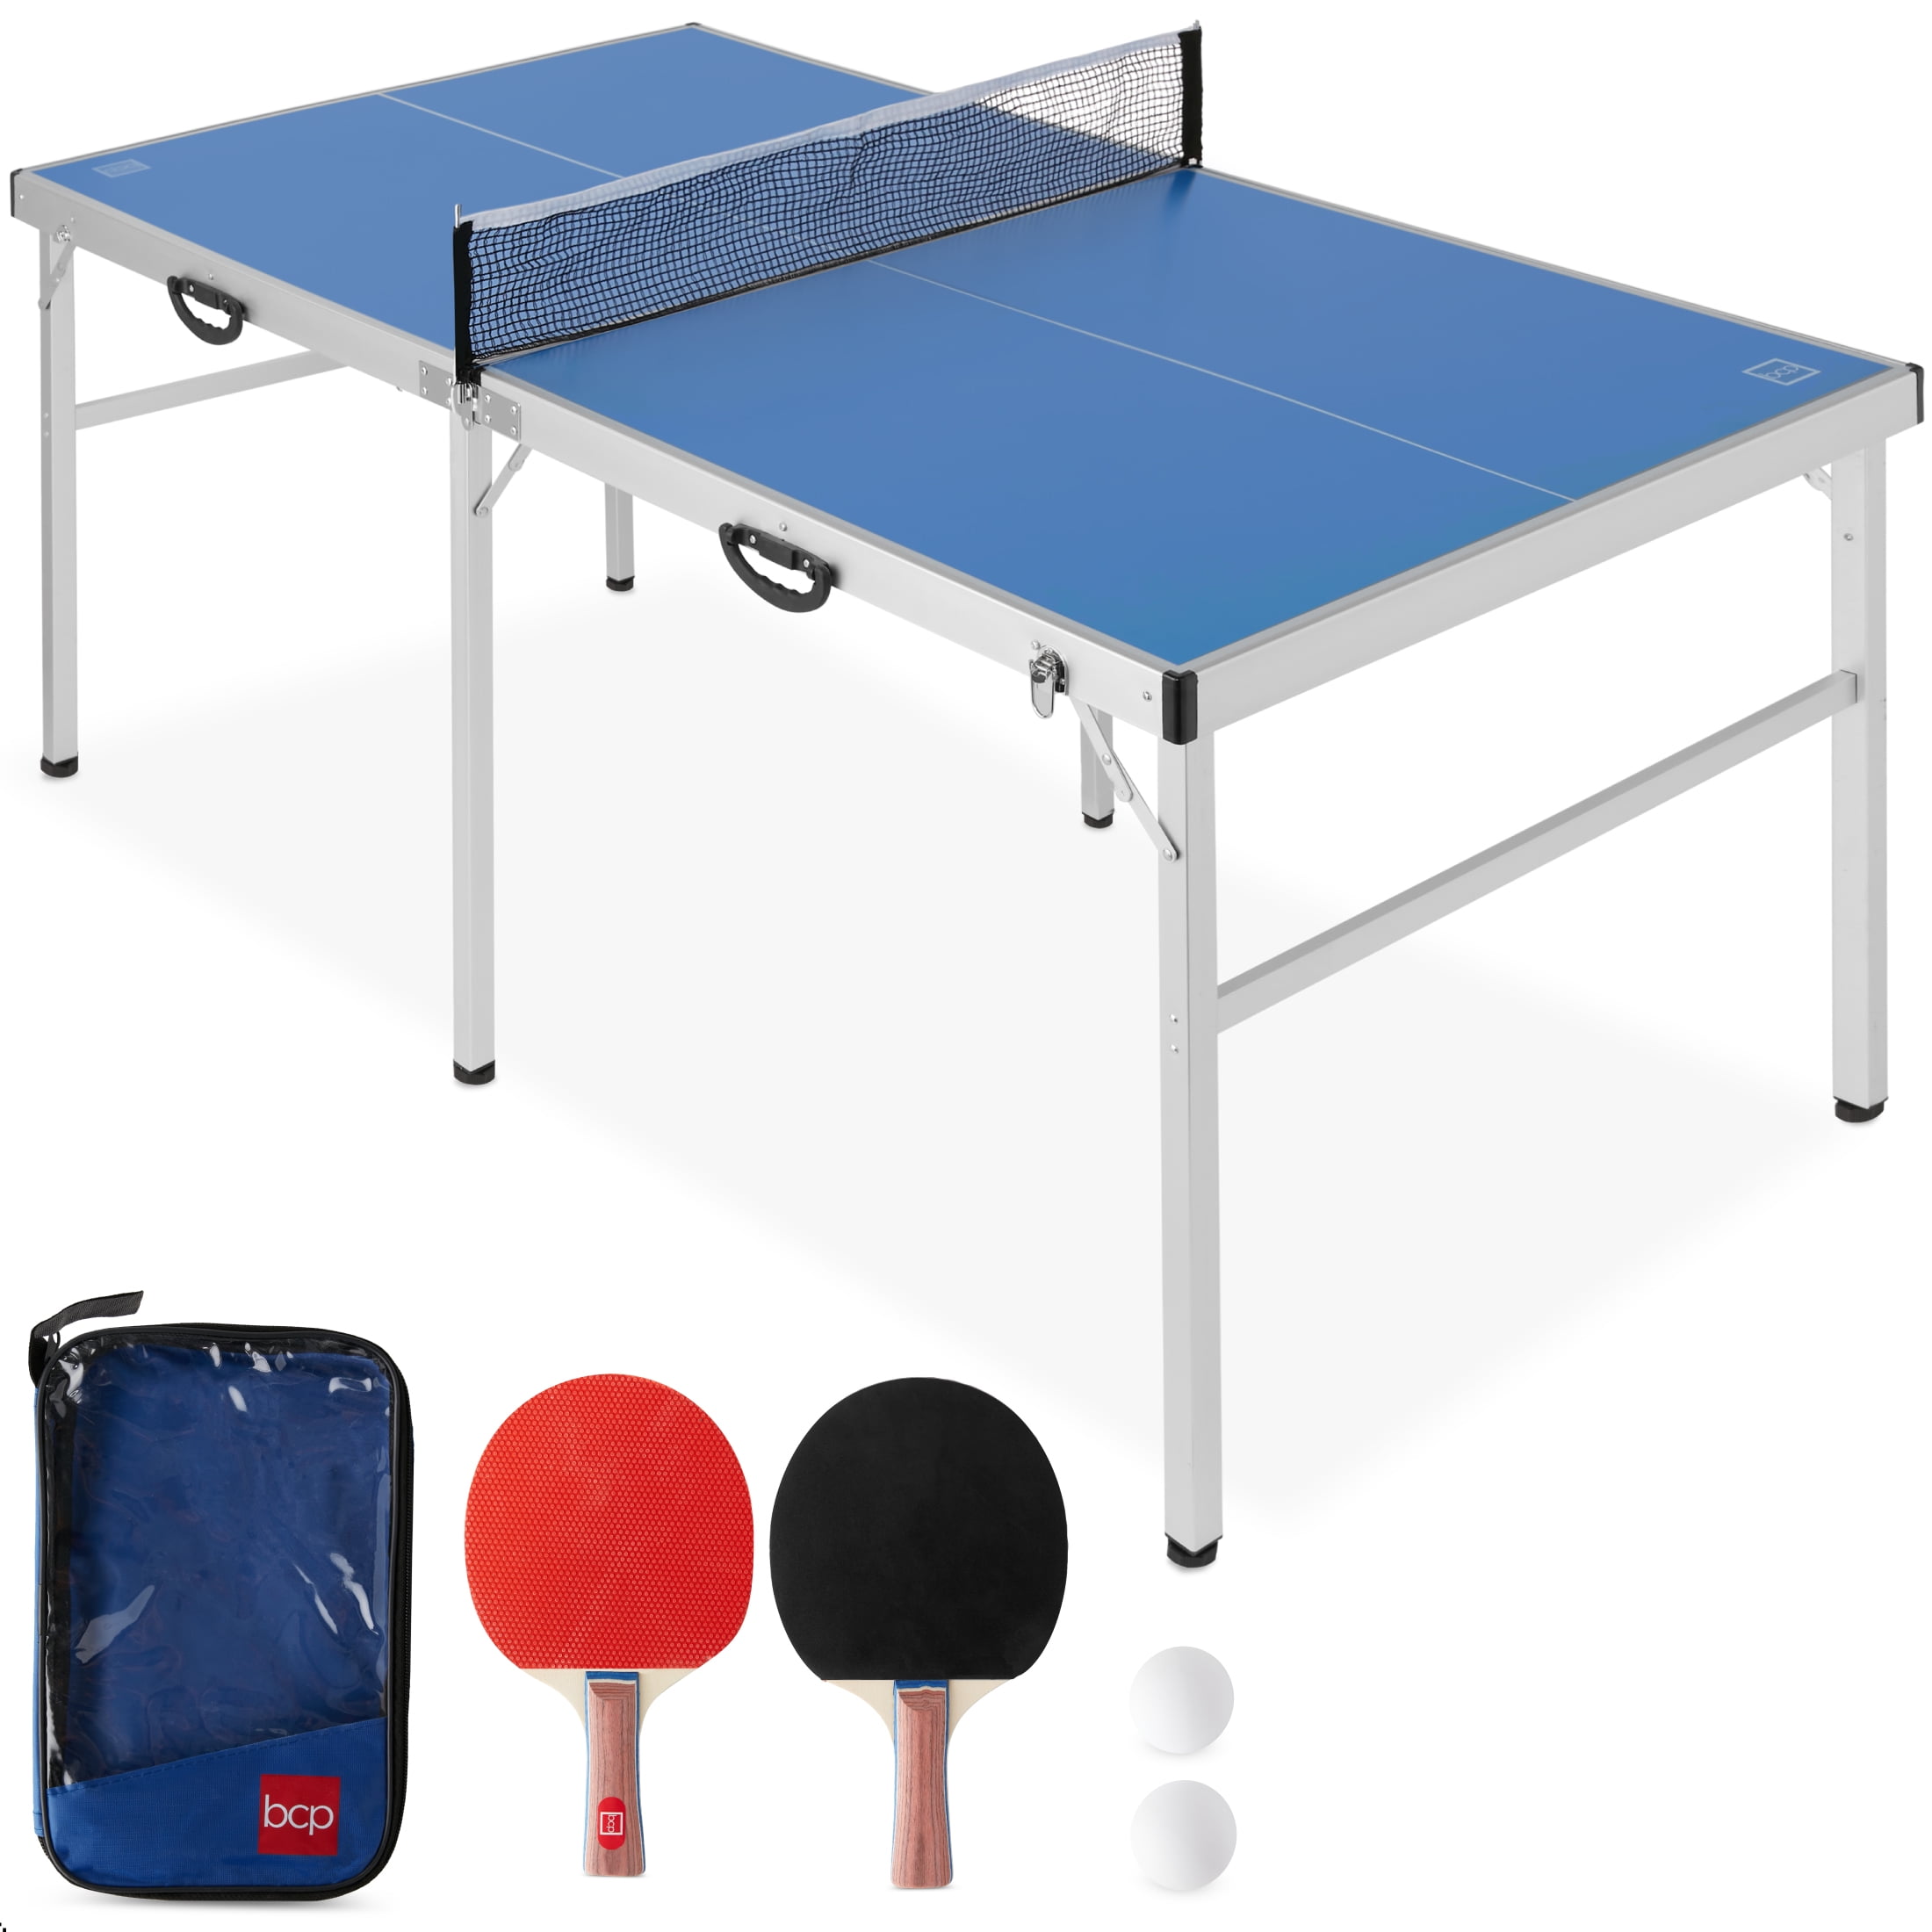 Indoor Games Sport Portable Table Tennis Net Bracket Ping-Pong Paddles Kit Set 